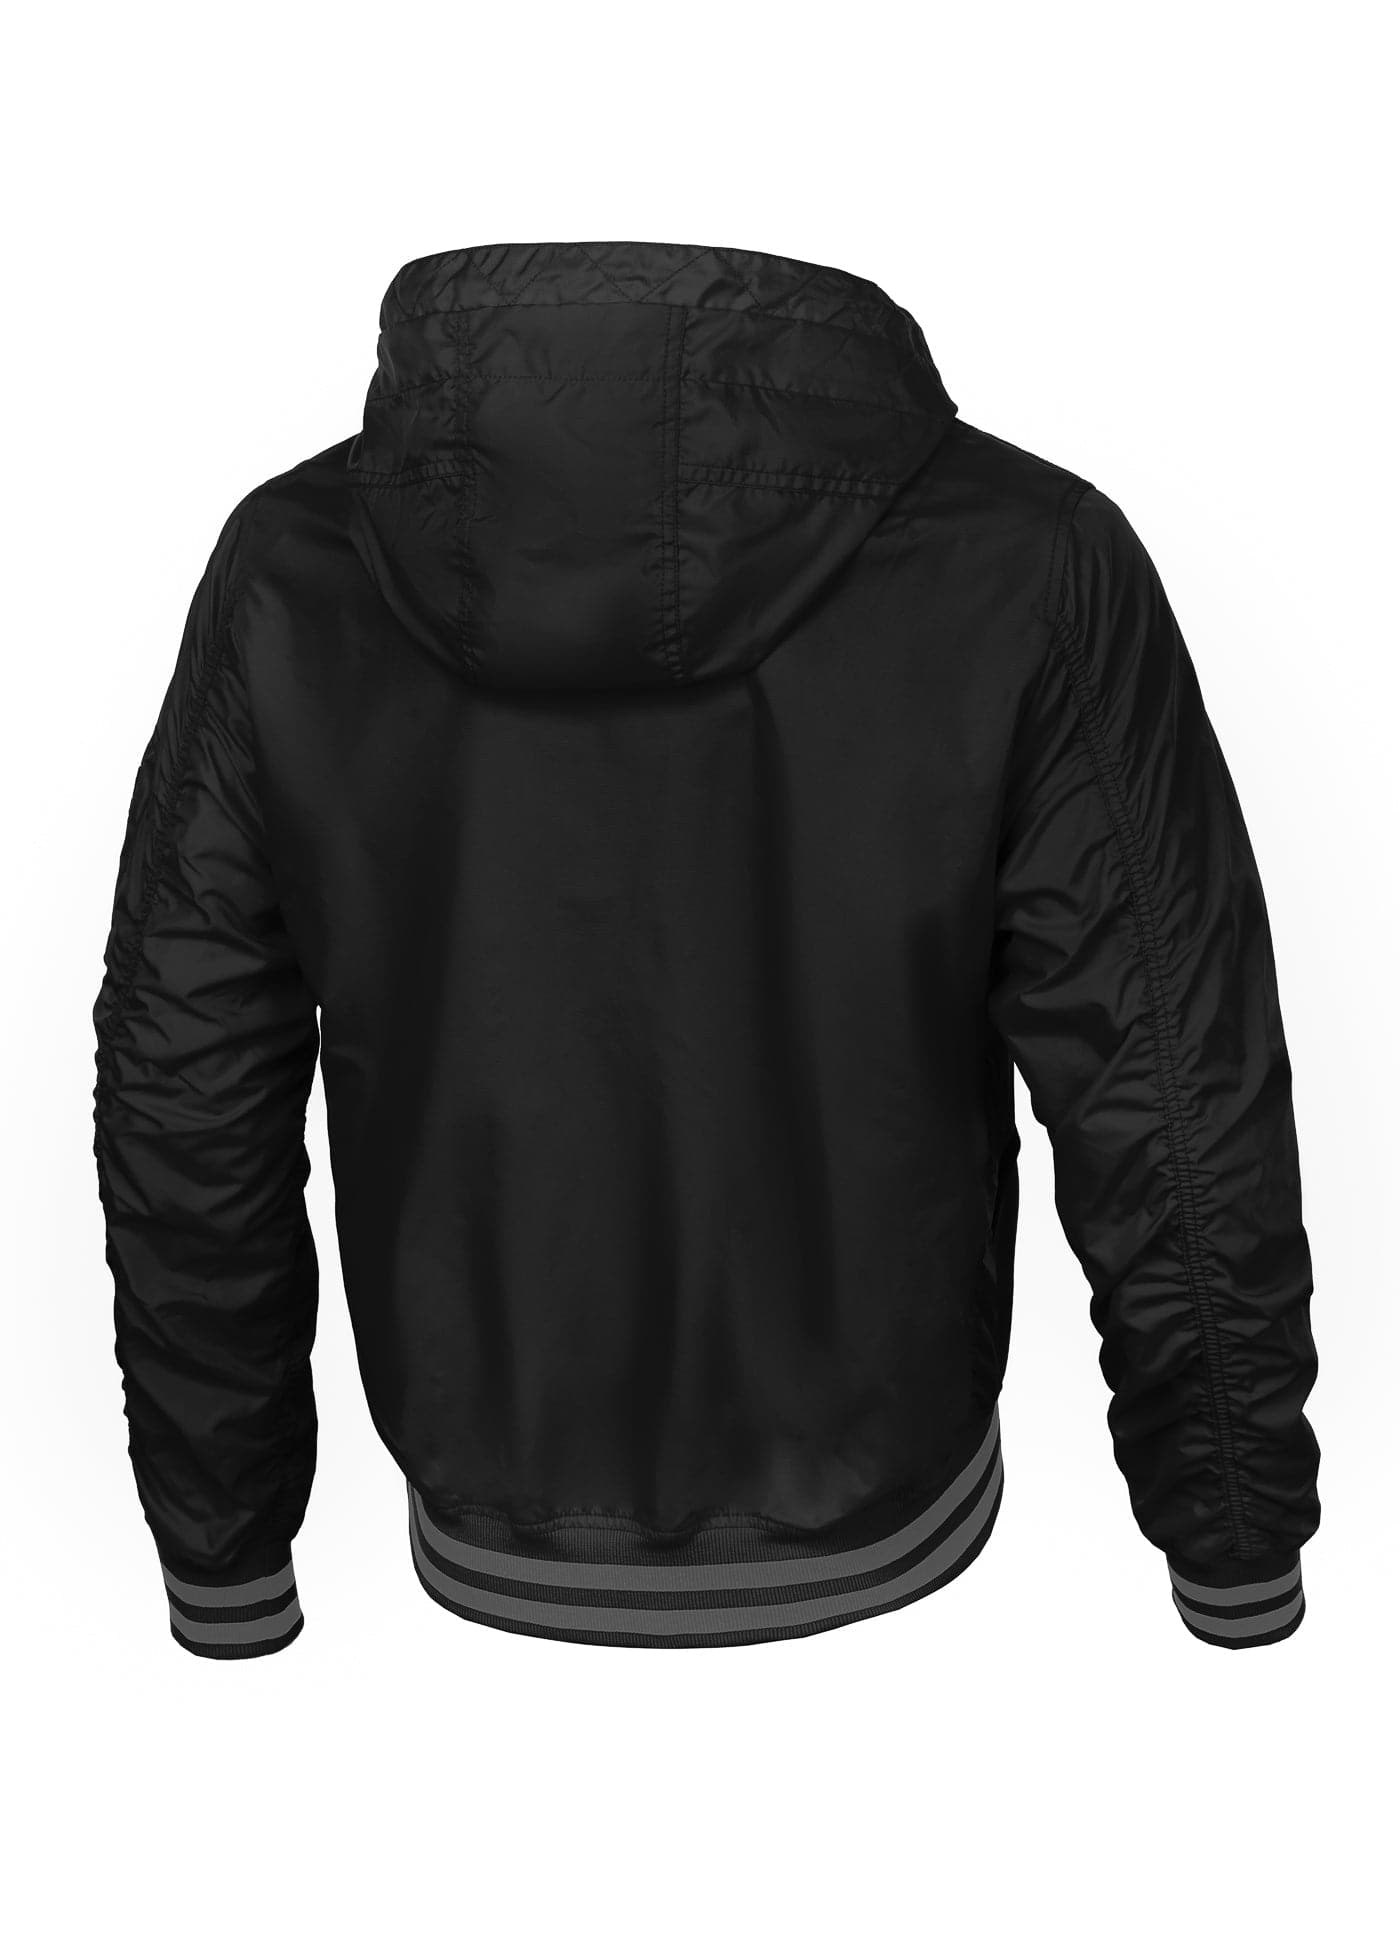 Buy OVERPARK Black Jacket | Pitbull Store